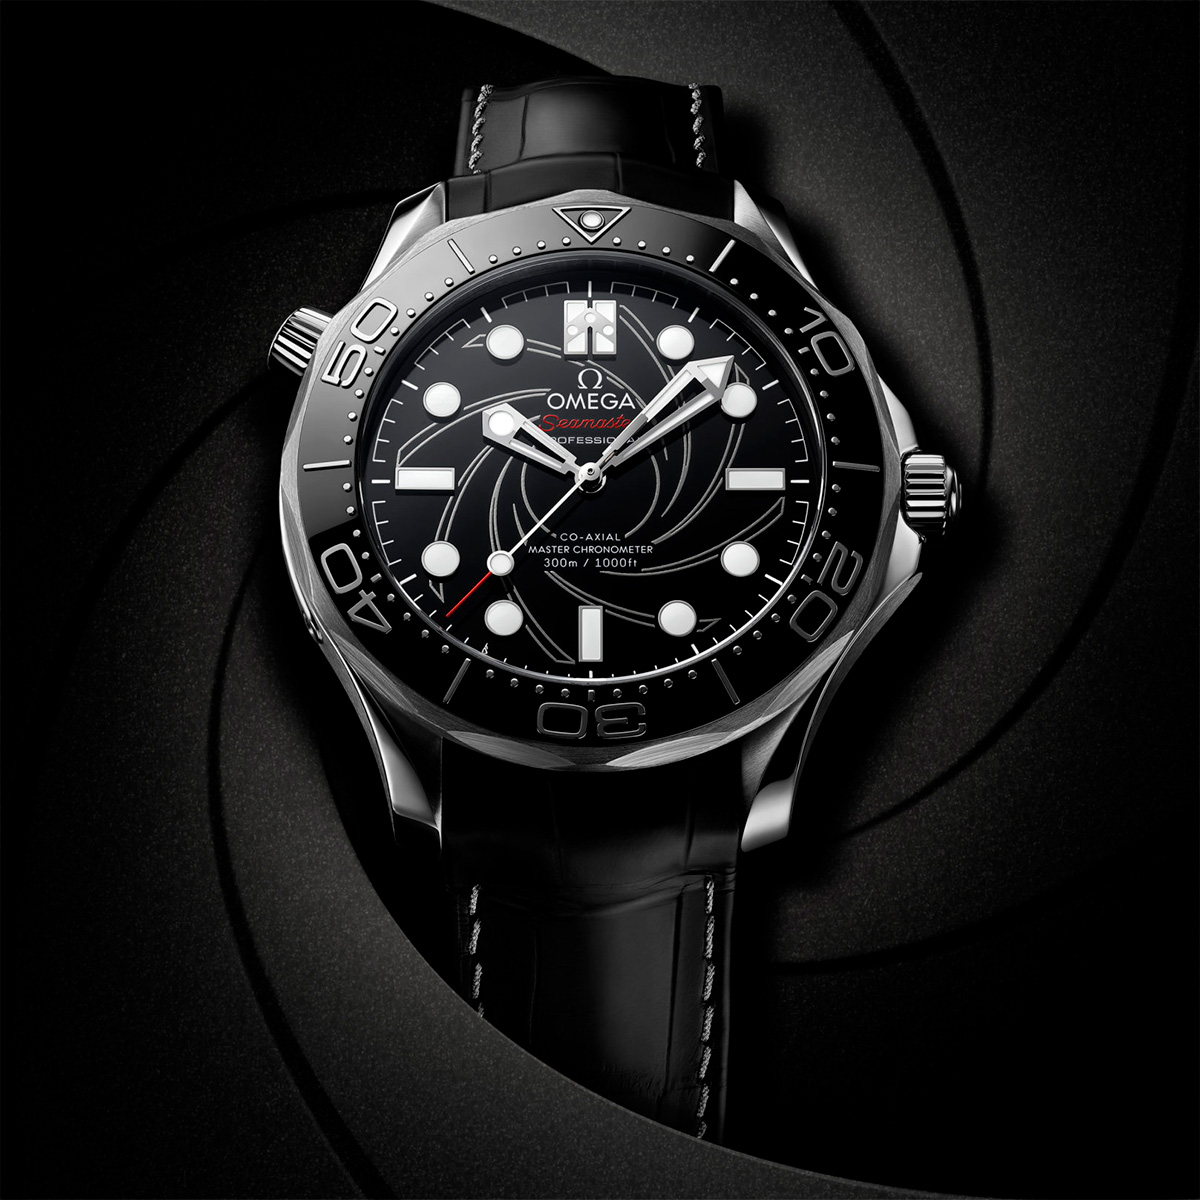 Omega Goes PlatinumGold For New James Bond Seamaster Numbered Edition Watch Bond Lifestyle